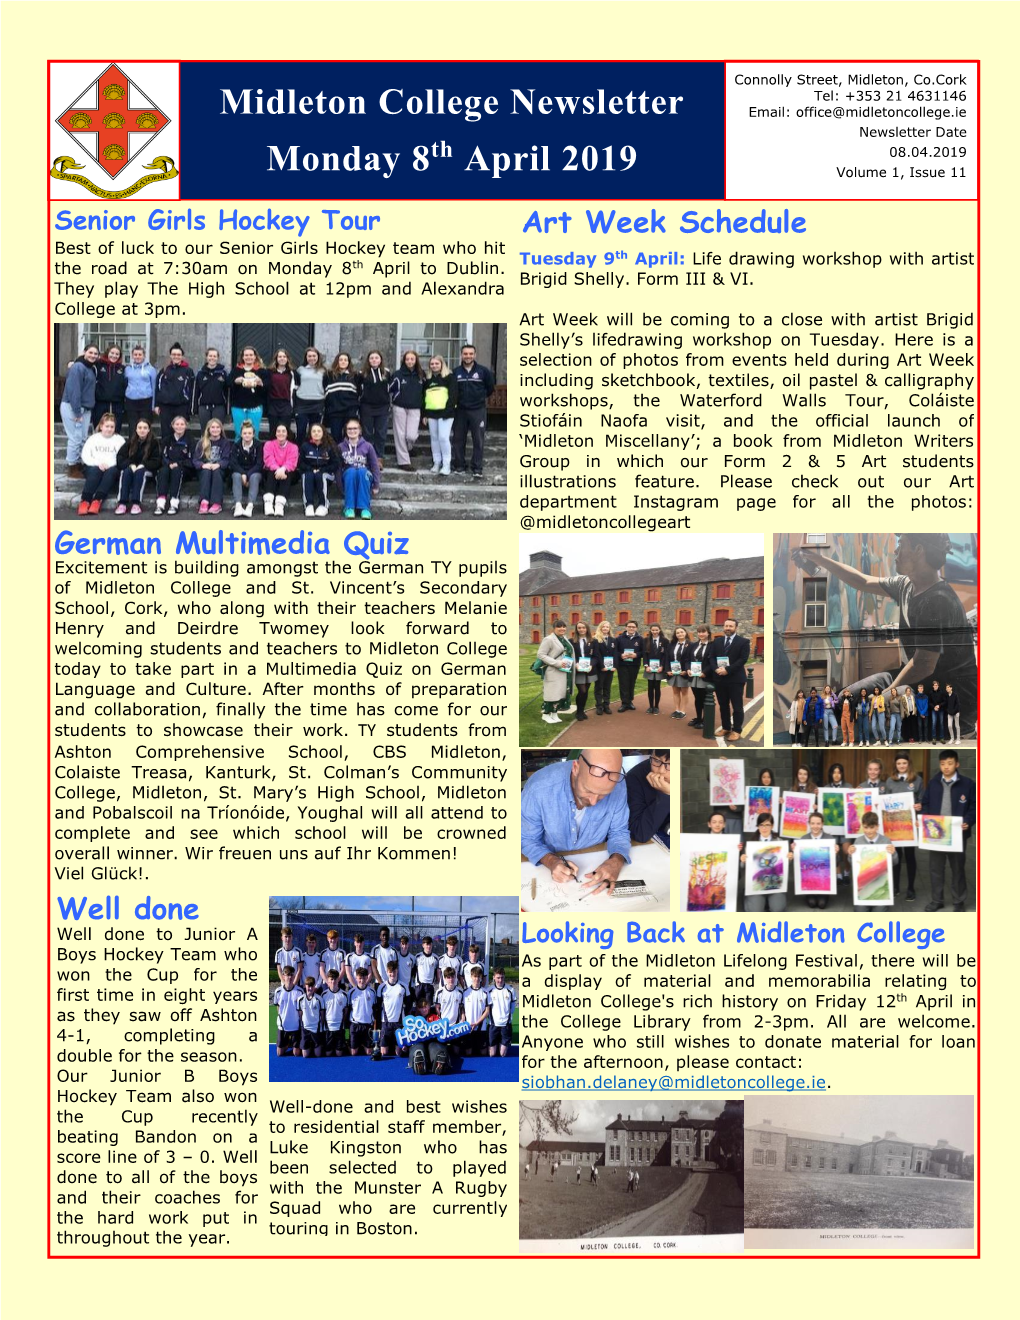 Midleton College Newsletter Monday 8 April 2019